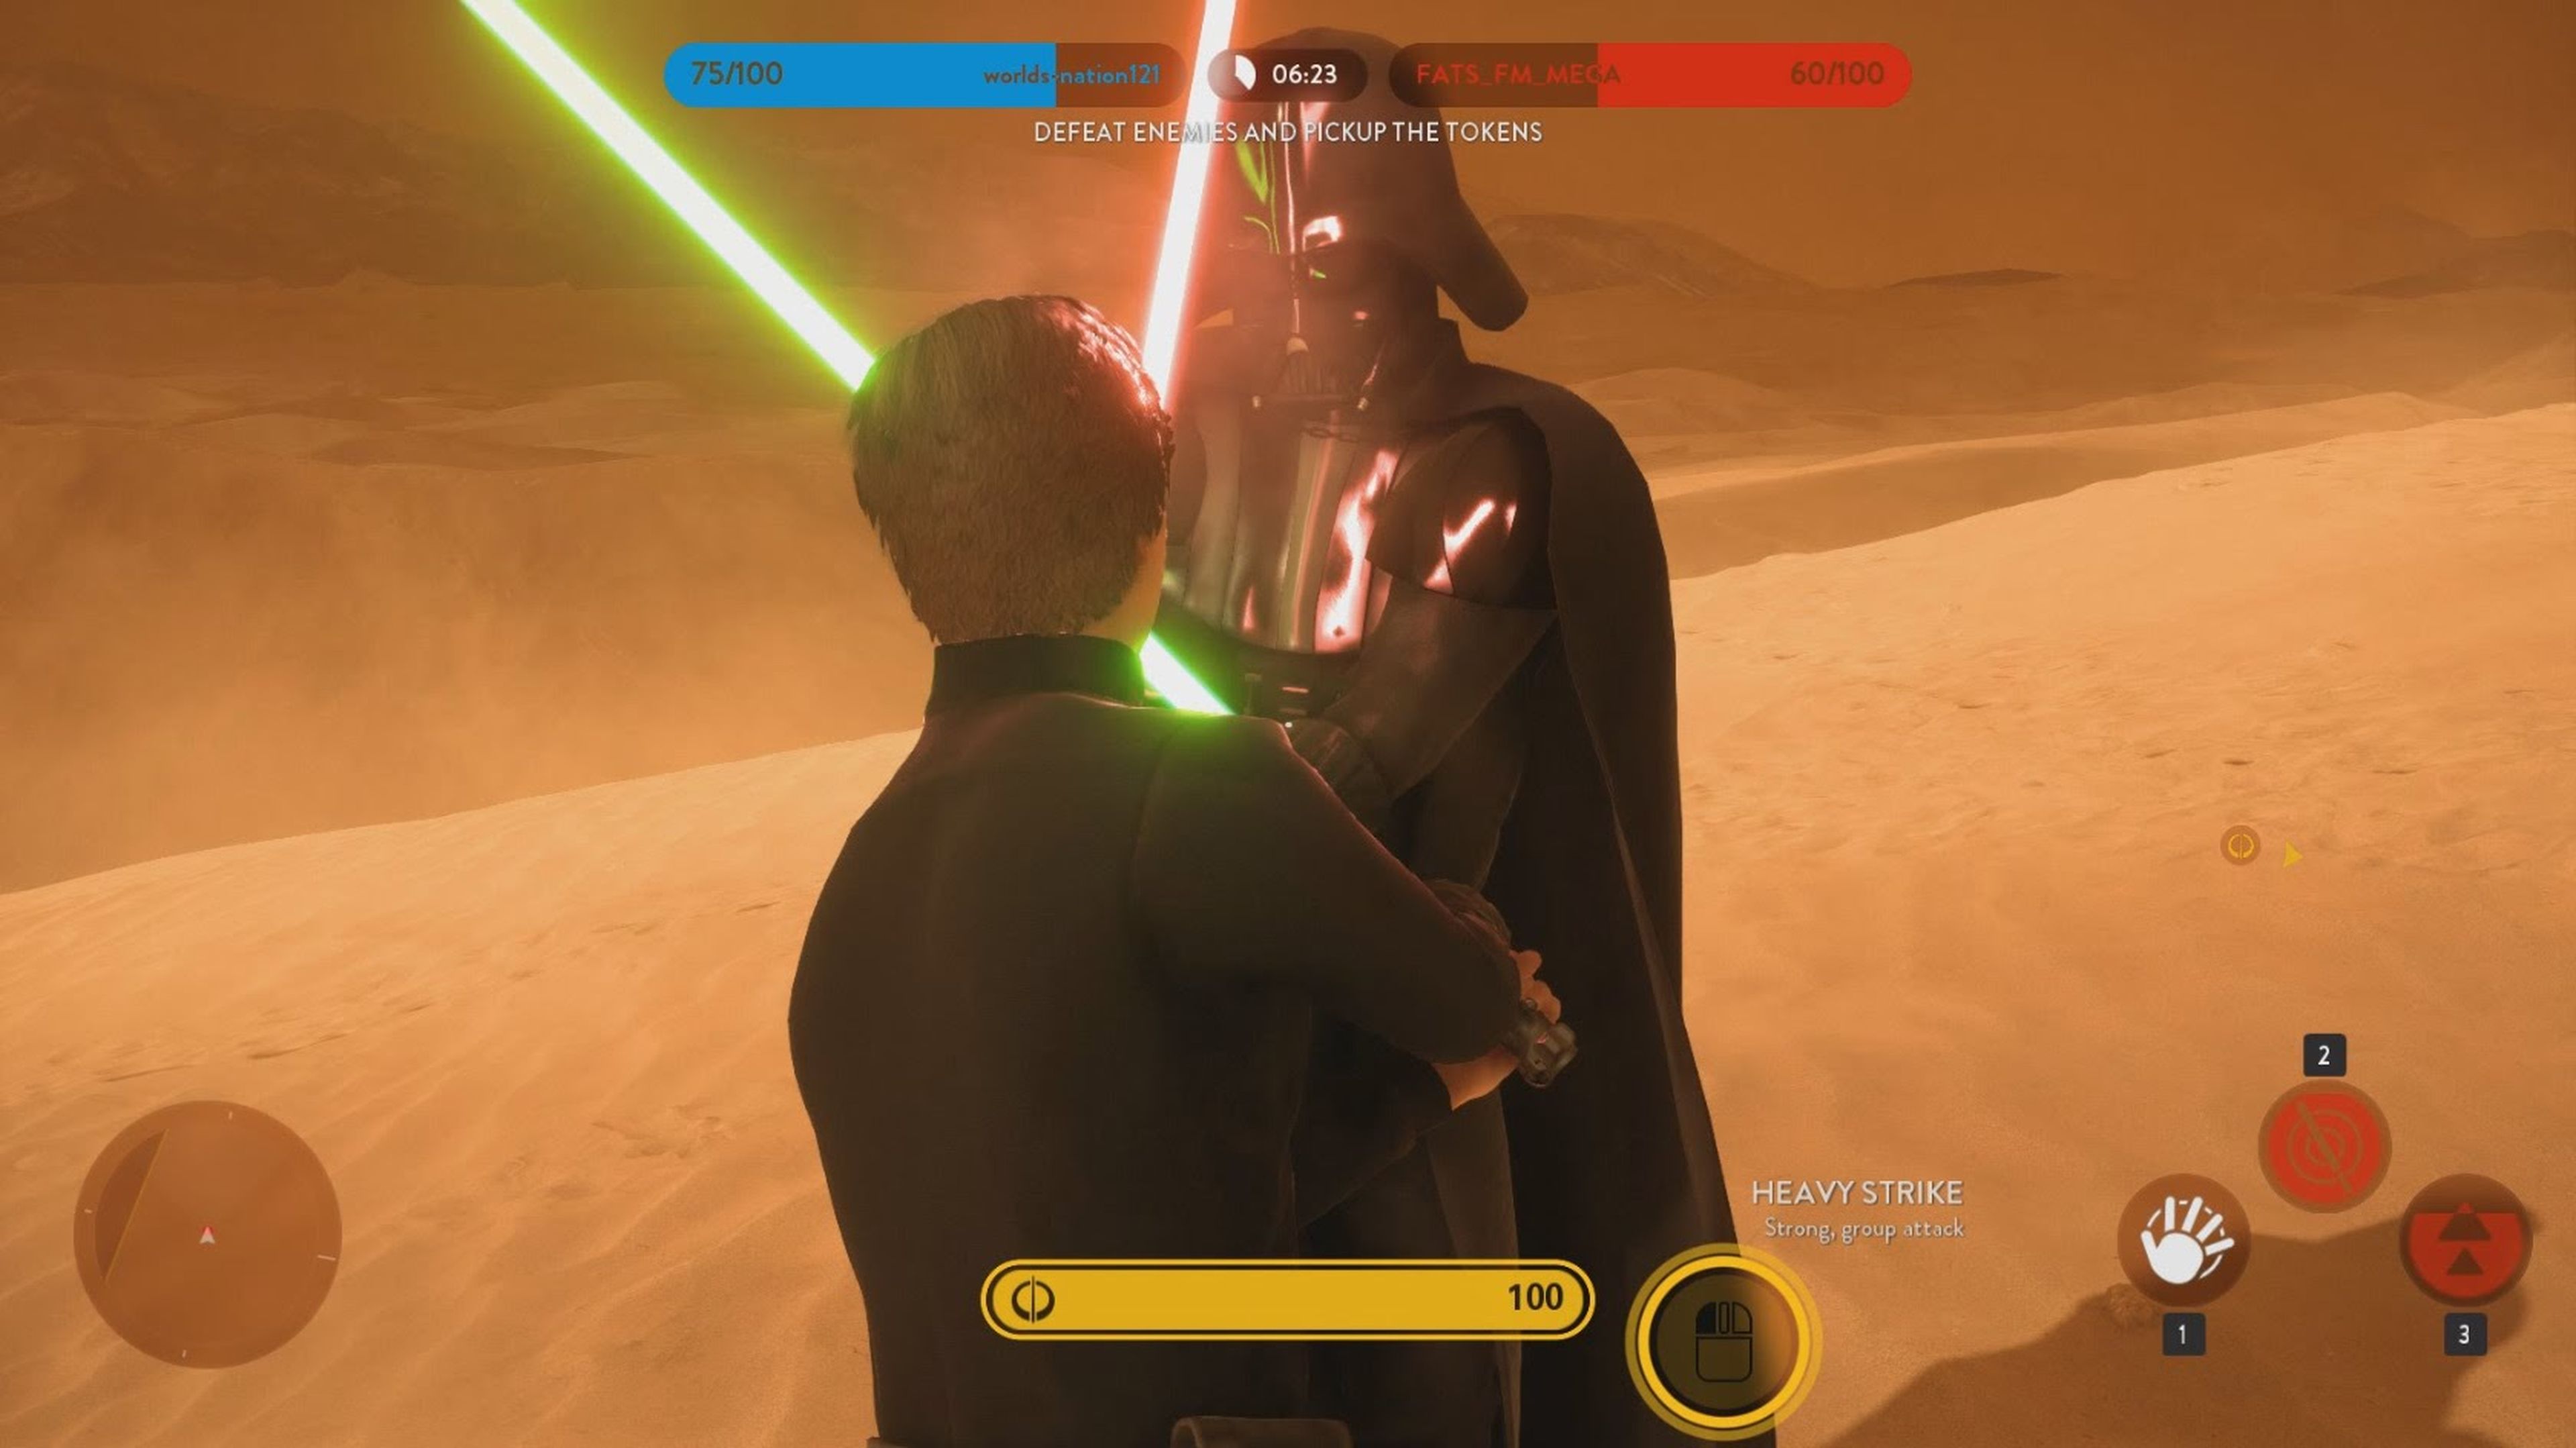 Star Wars Battlefront - DLC gratis de Luke, Leia y Tatooine